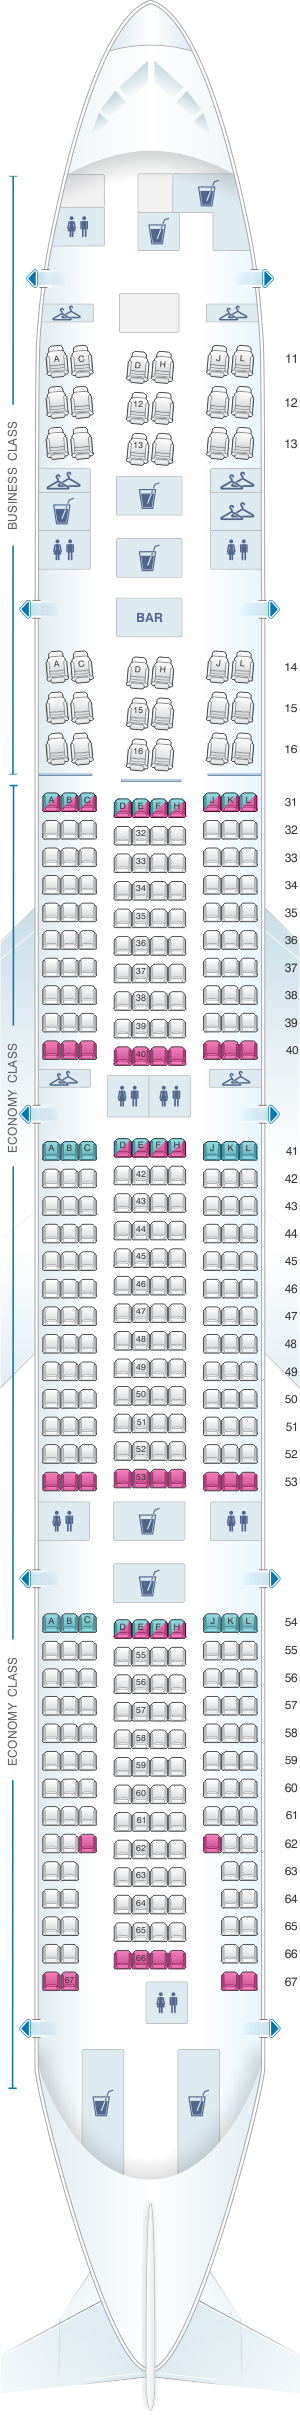 boeing 777 300 seating china air